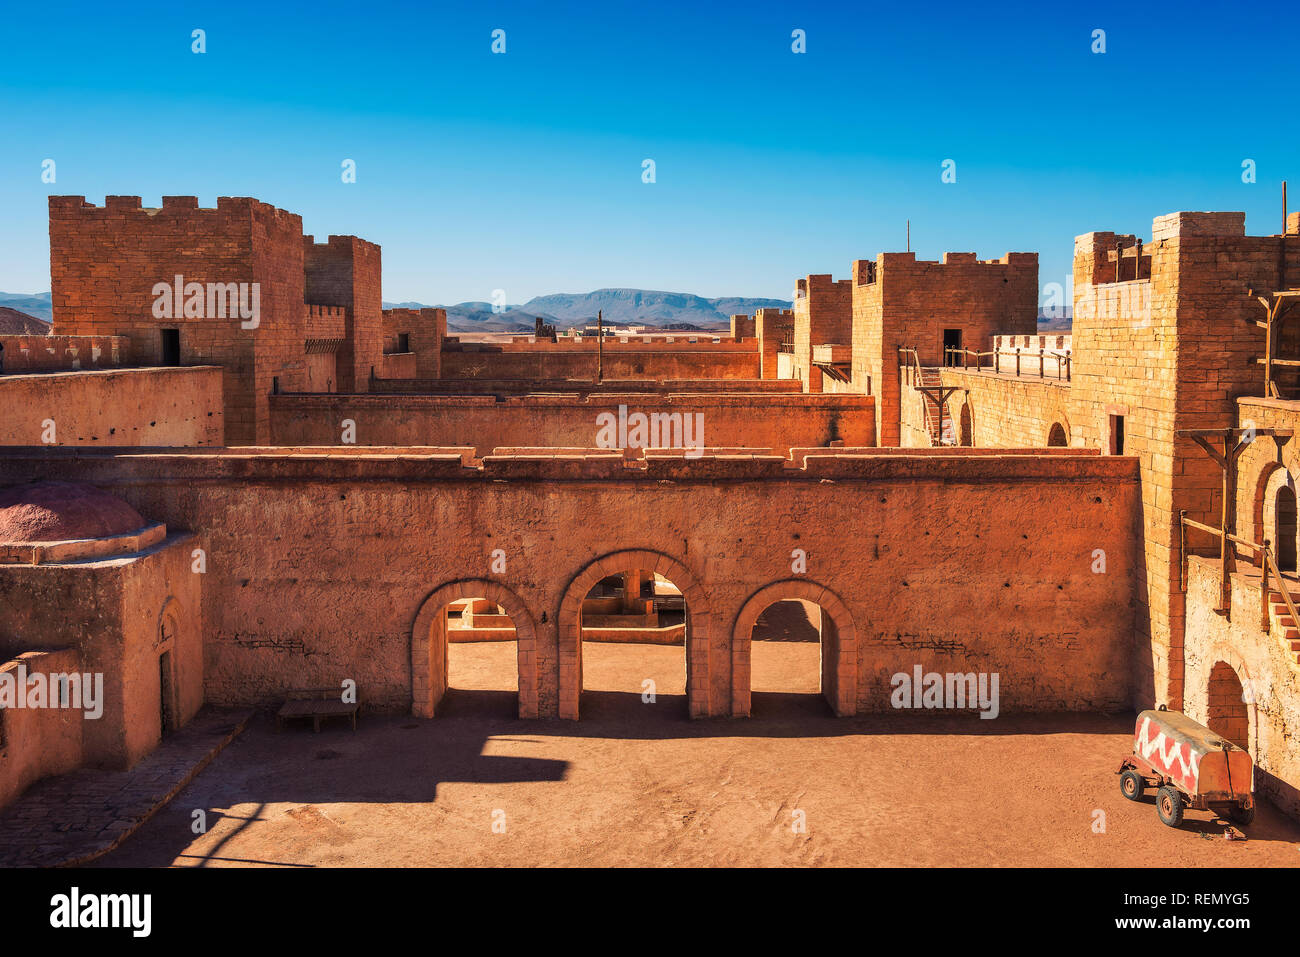 CLA Film Studios in Ouarzazate, Morocco Stock Photo